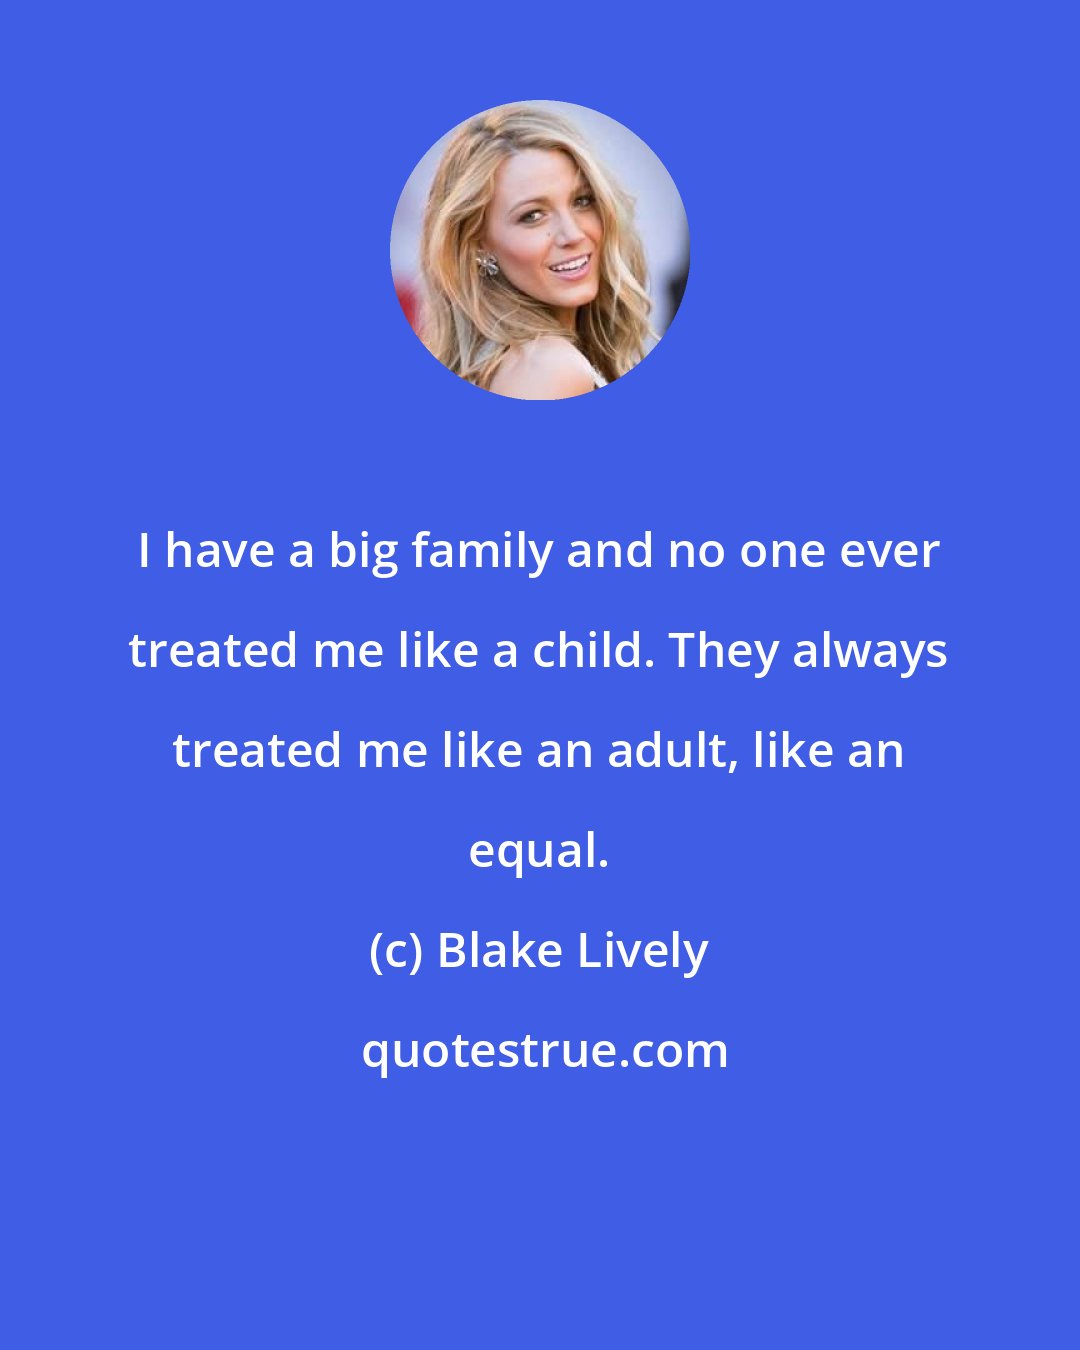 Blake Lively: I have a big family and no one ever treated me like a child. They always treated me like an adult, like an equal.